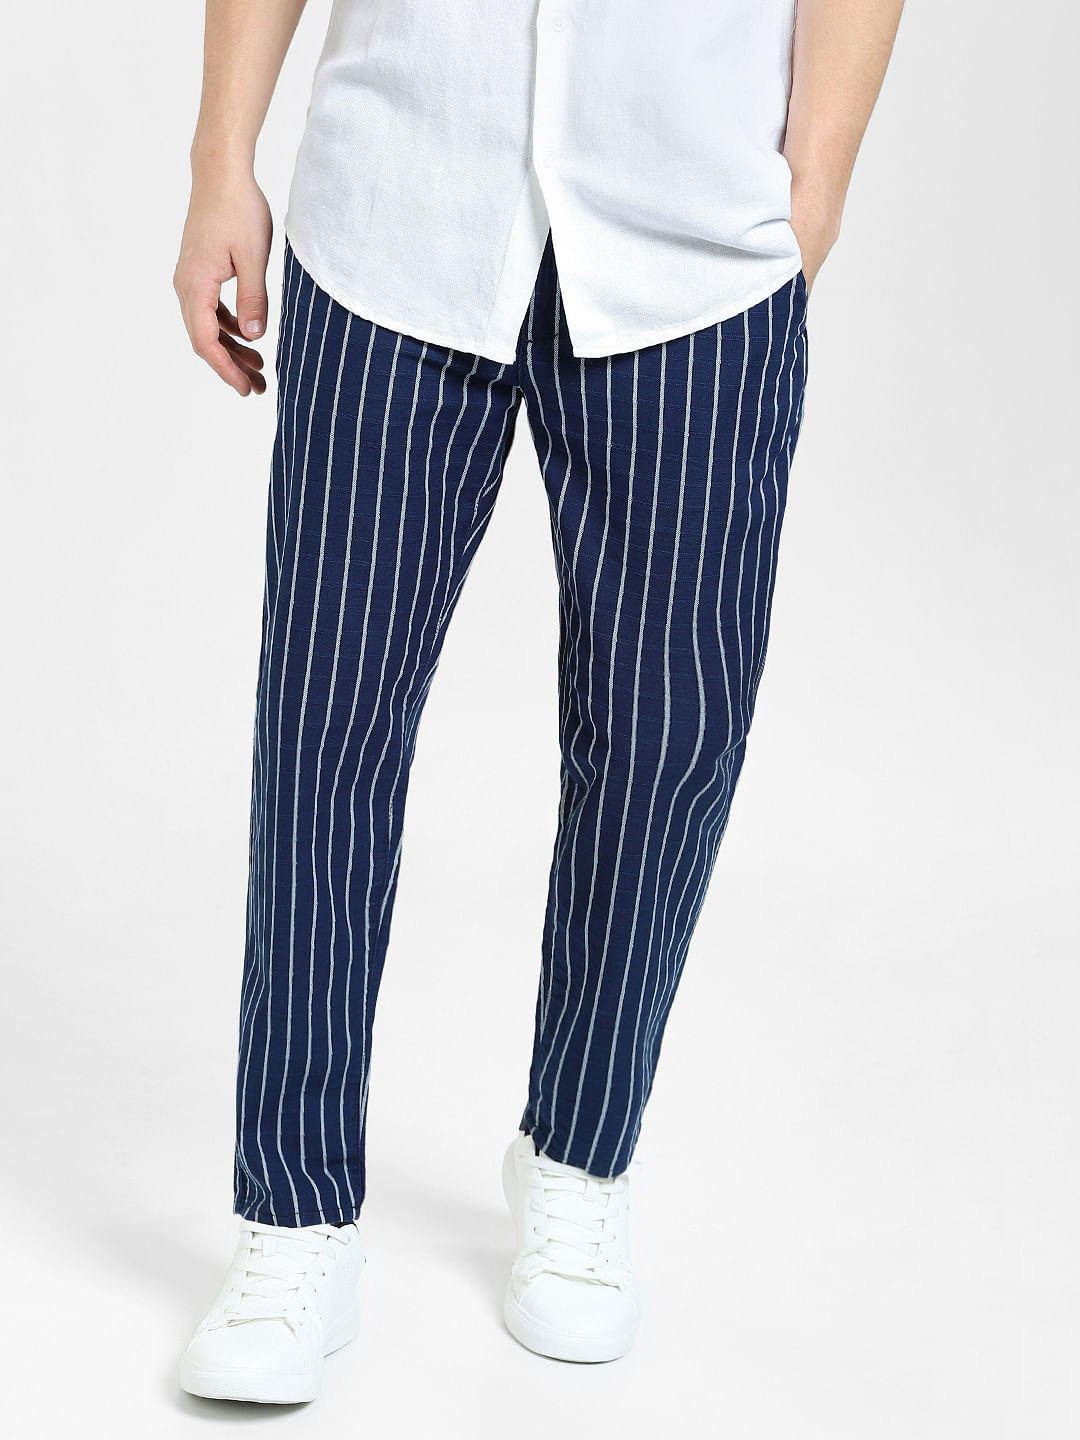 Anklelength trousers  WhiteDark blue striped  Ladies  HM IN